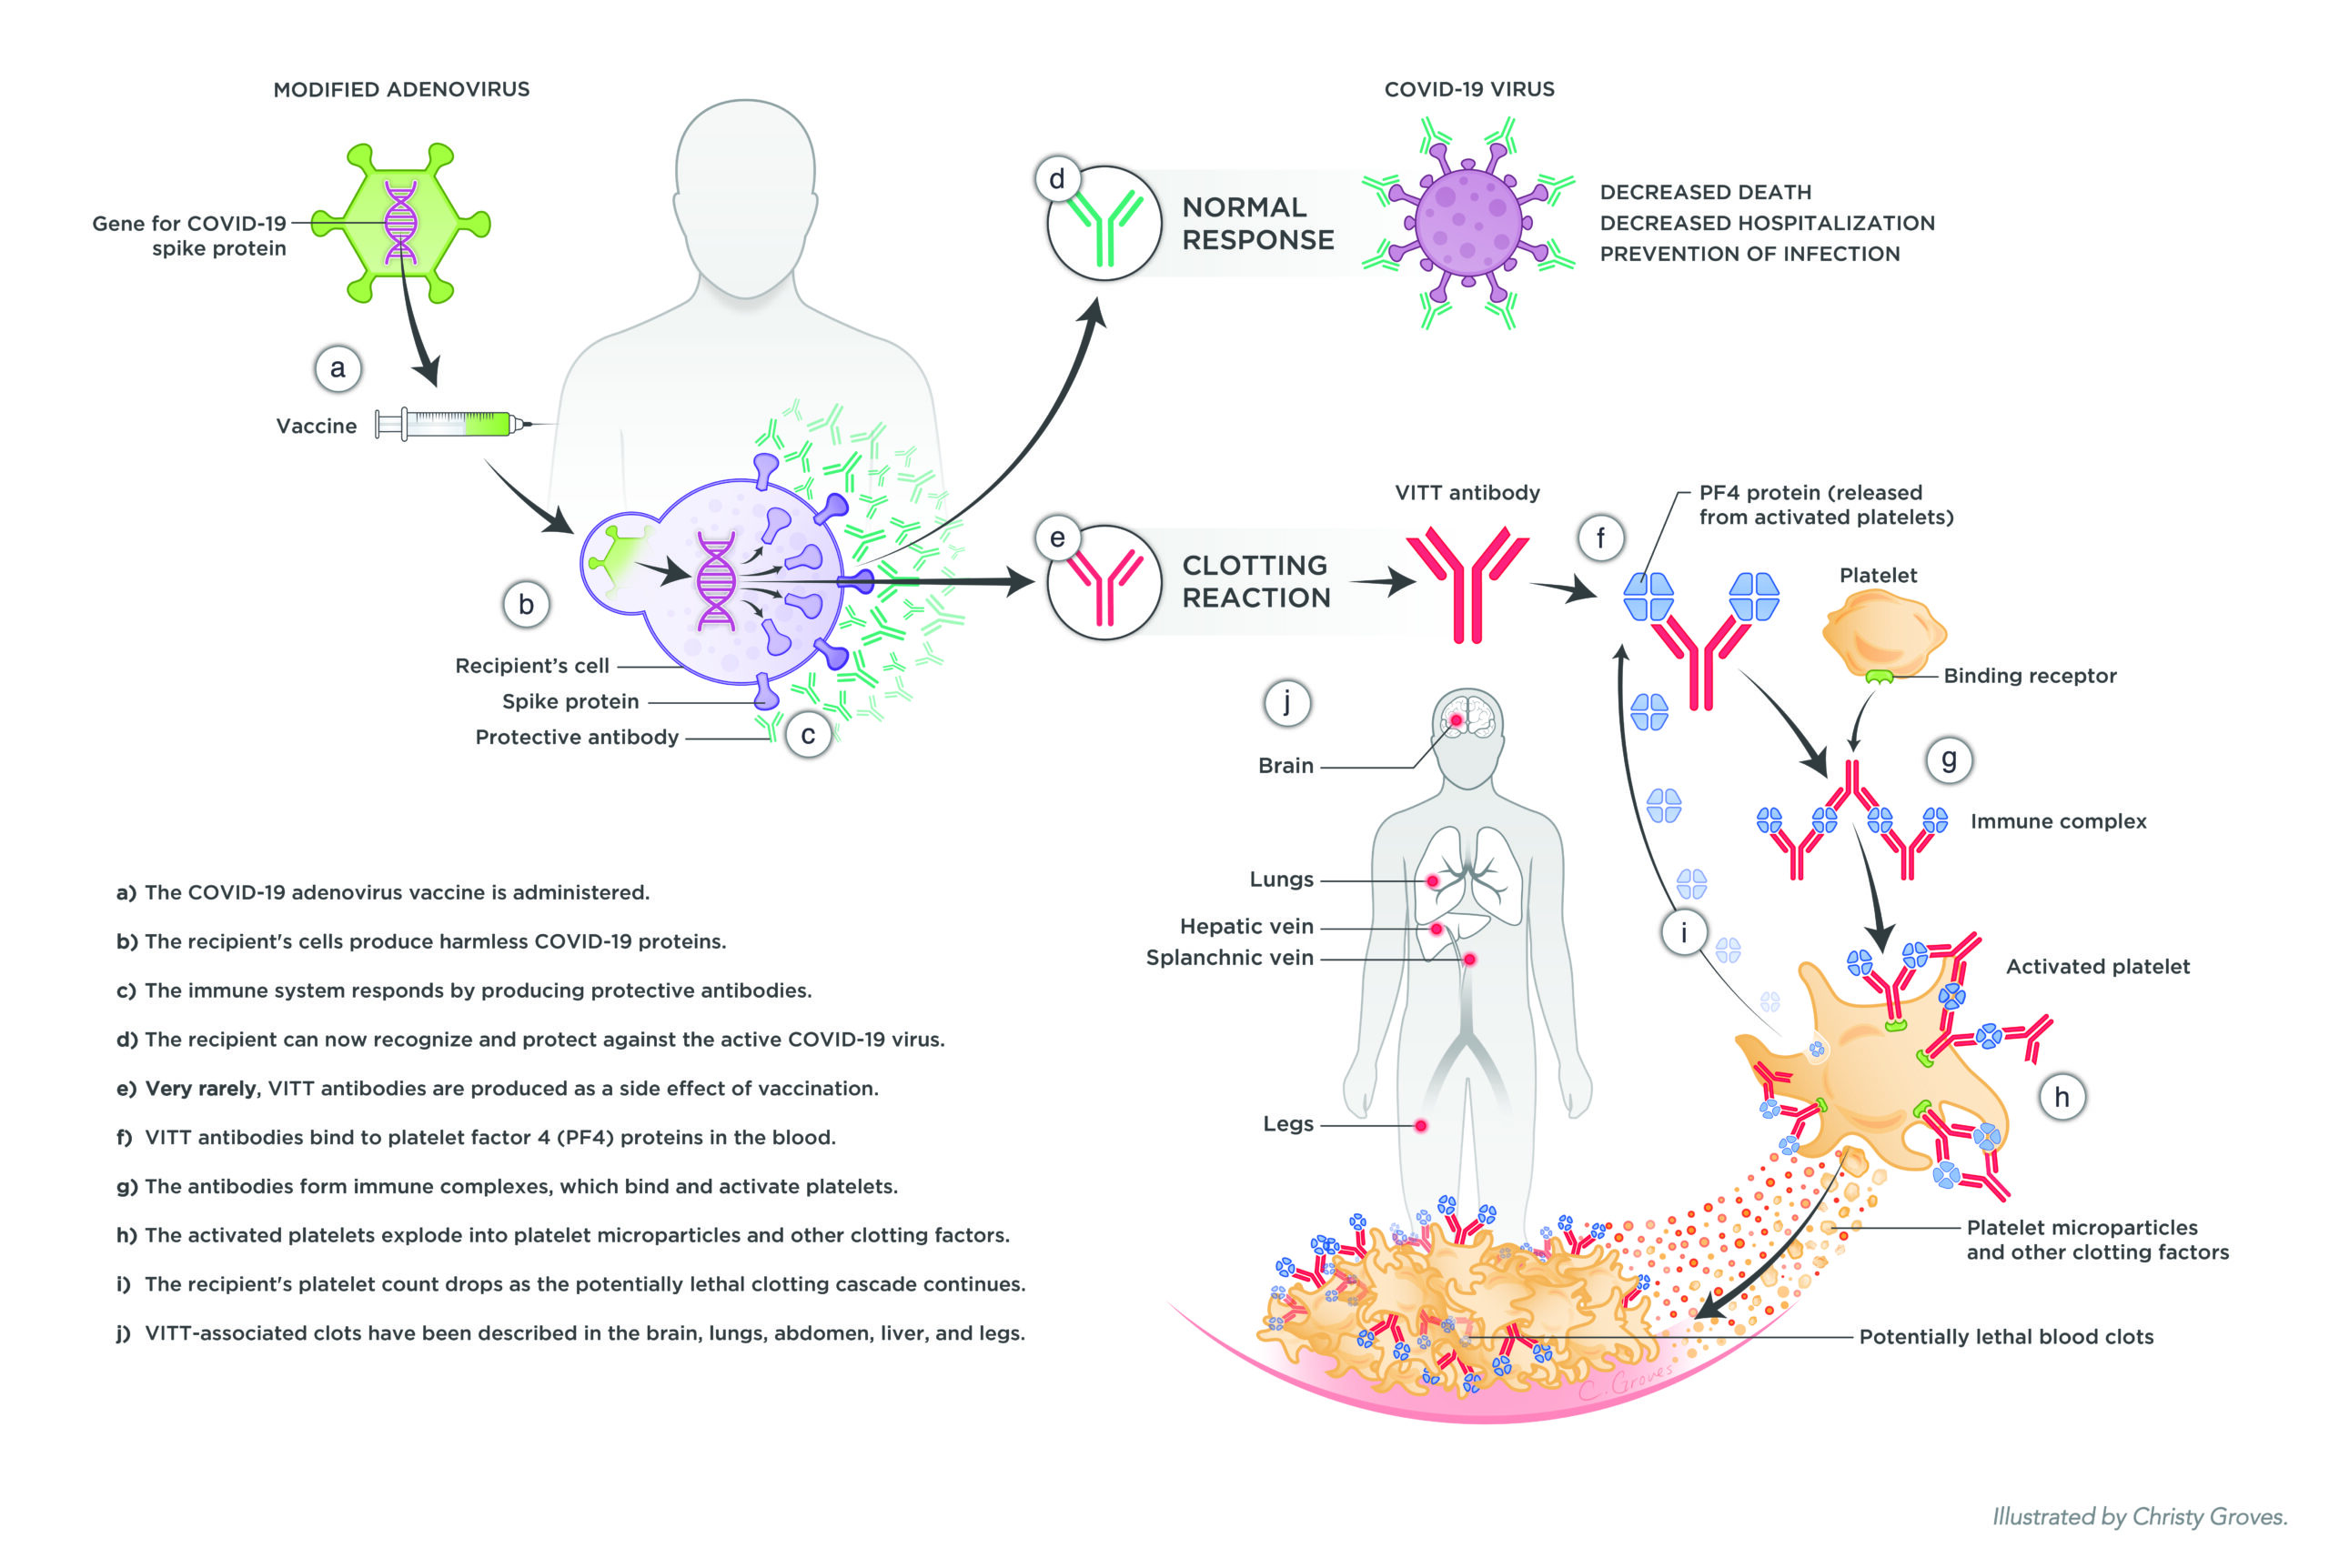 A Visualization of Vaccine-Induced Immune Thrombotic Thrombocytopenia (VITT)